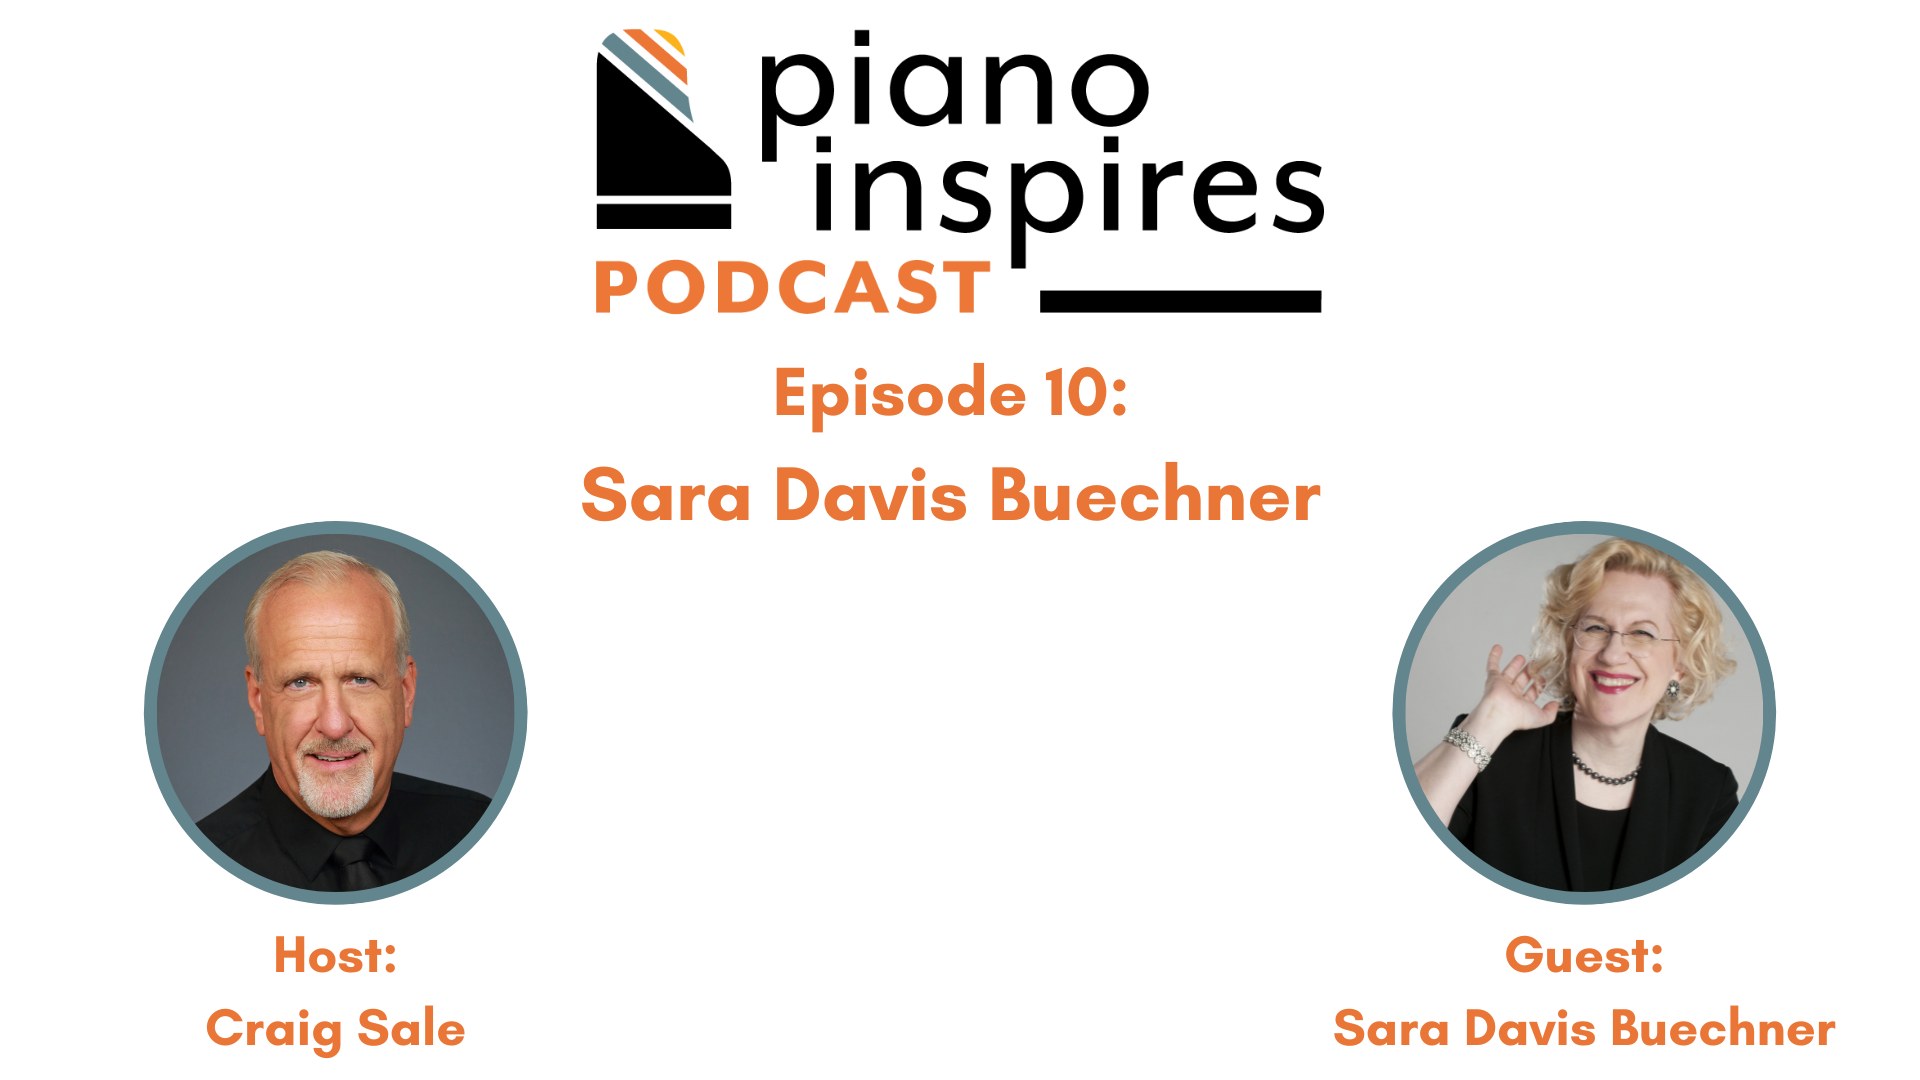 Episode 10: Sara Davis Buechner, Concert Pianist and Educator